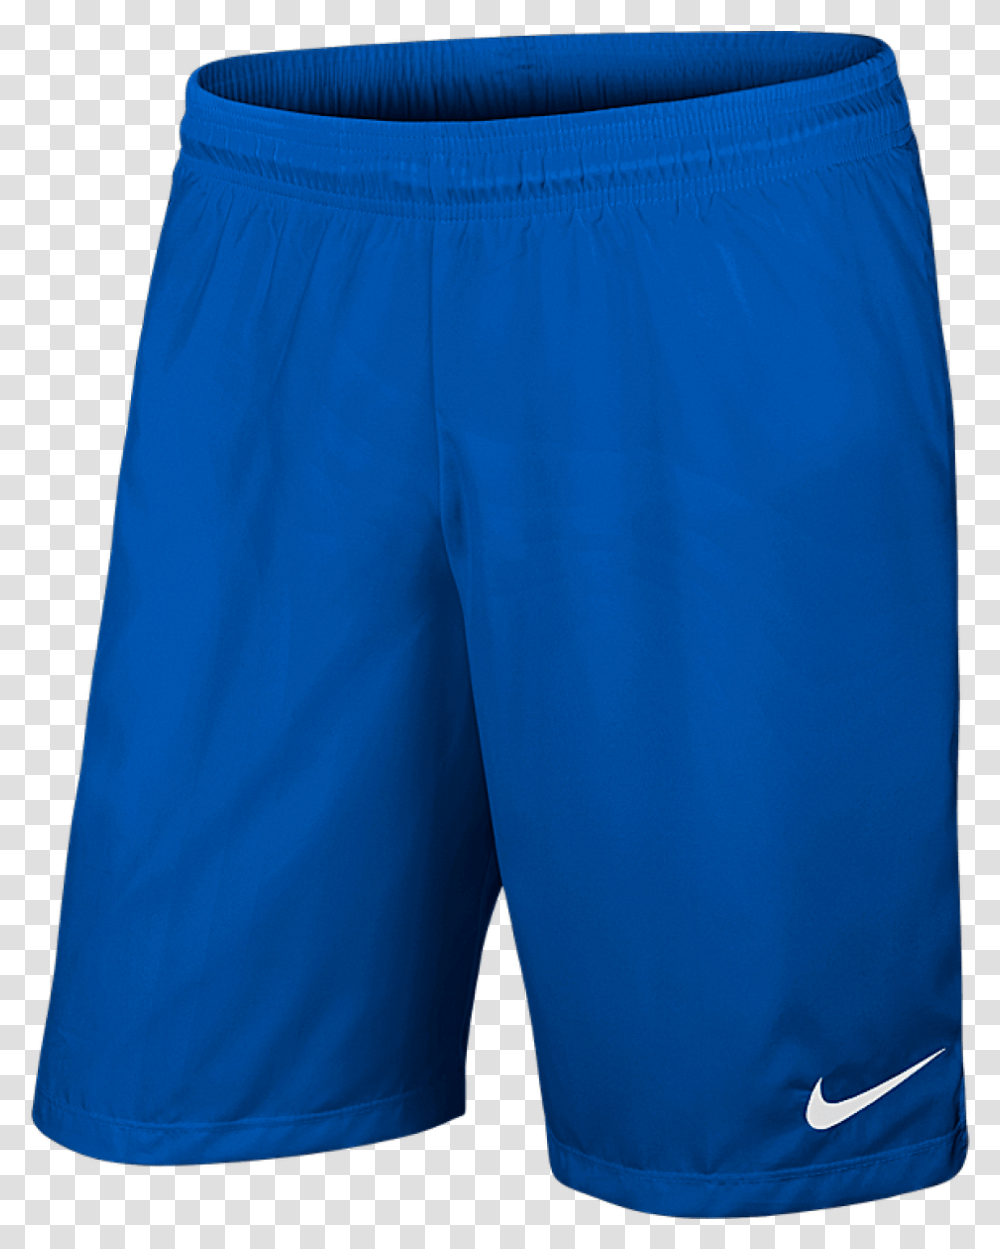 Nike Blue Football Shorts, Apparel, Underwear Transparent Png